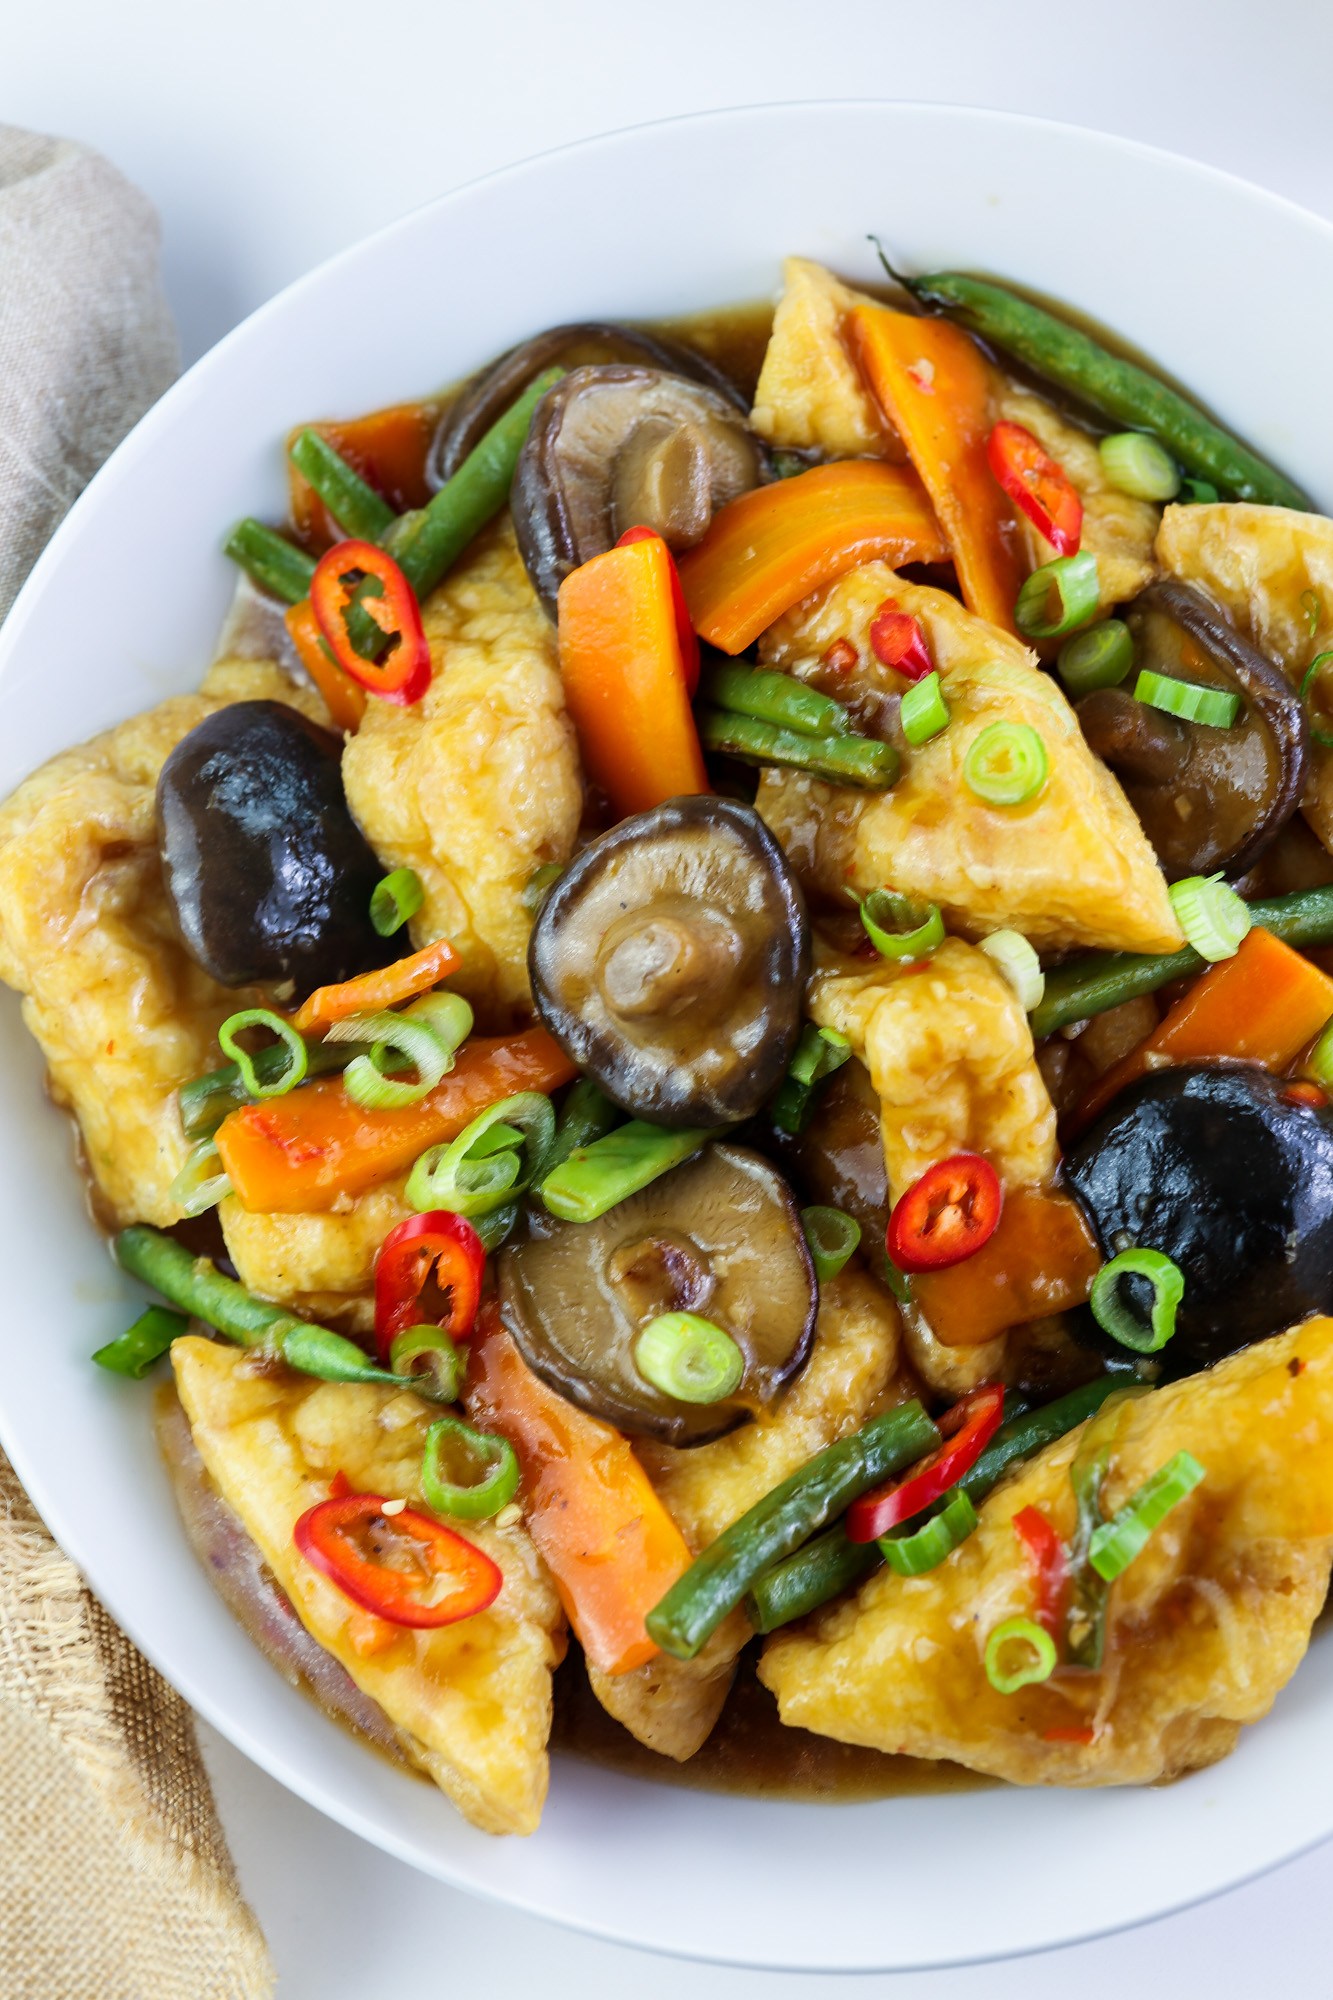 From Tofu Puffs with Asian Vegan Mushroom Sauce to Southwest Quinoa Salad: 10 Vegan Recipes that Went Viral Last Week!